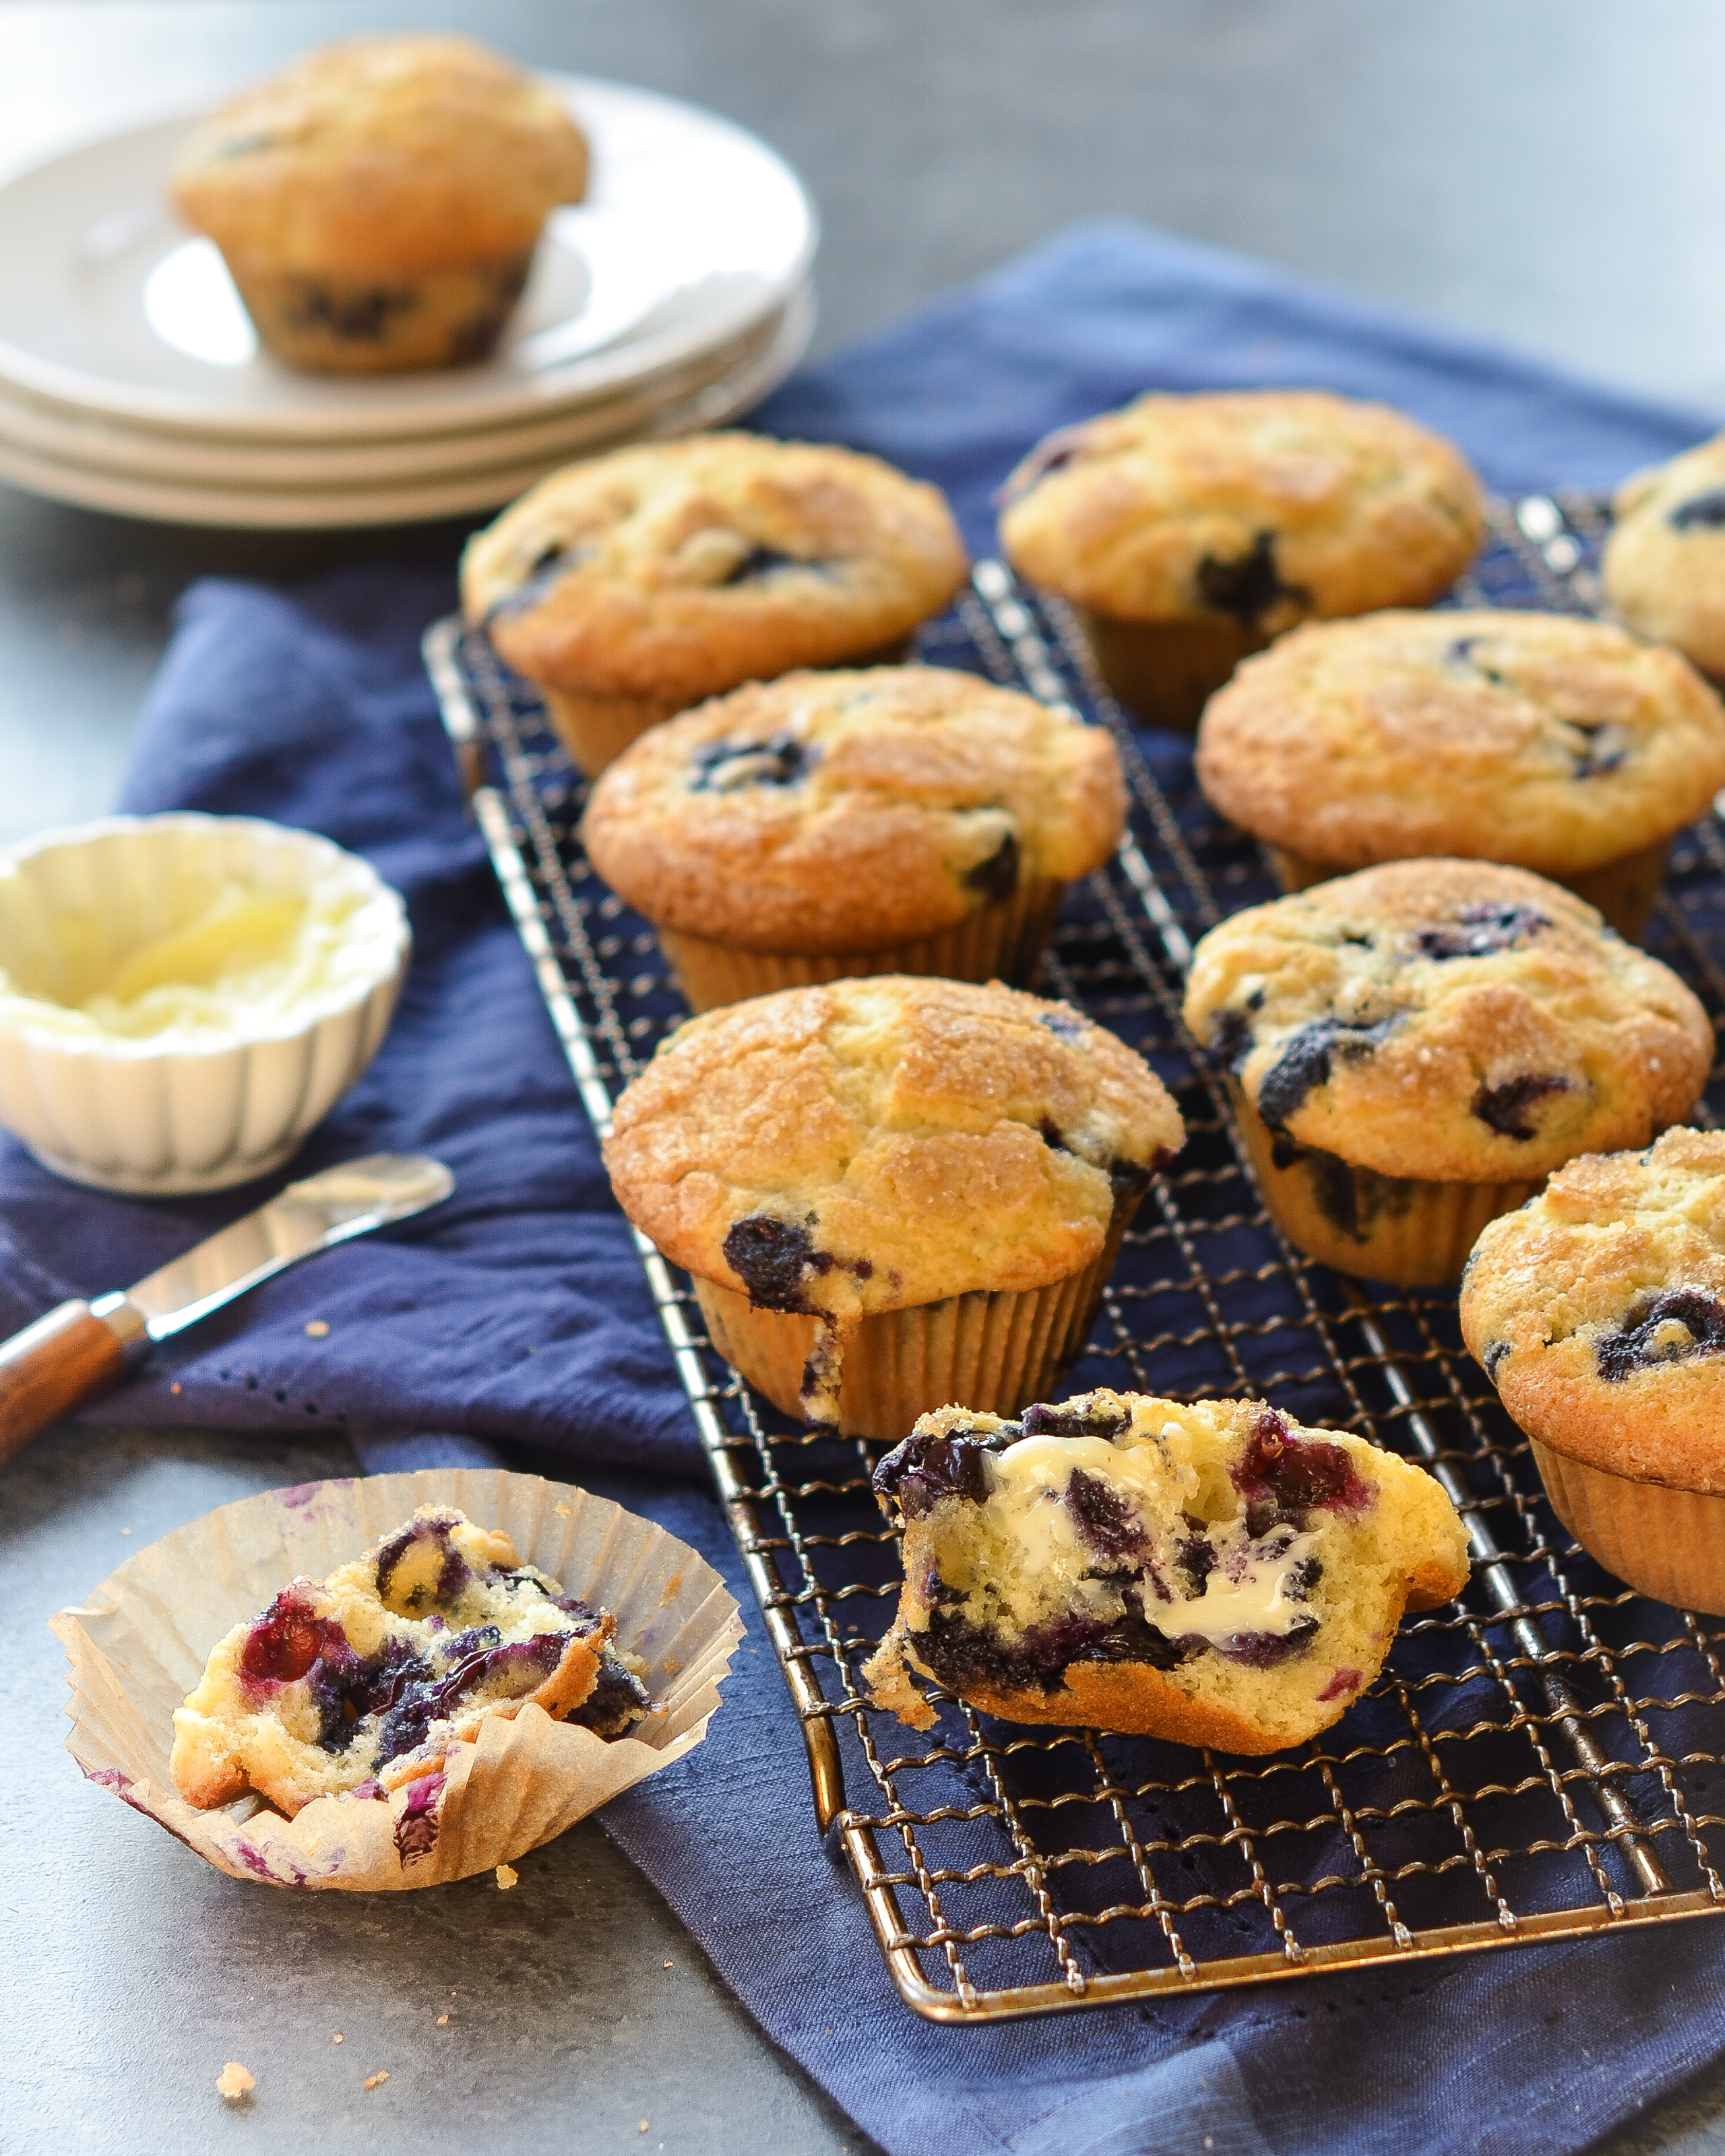 https://www.onceuponachef.com/images/2014/07/Best-Blueberry-Muffins-1.jpg